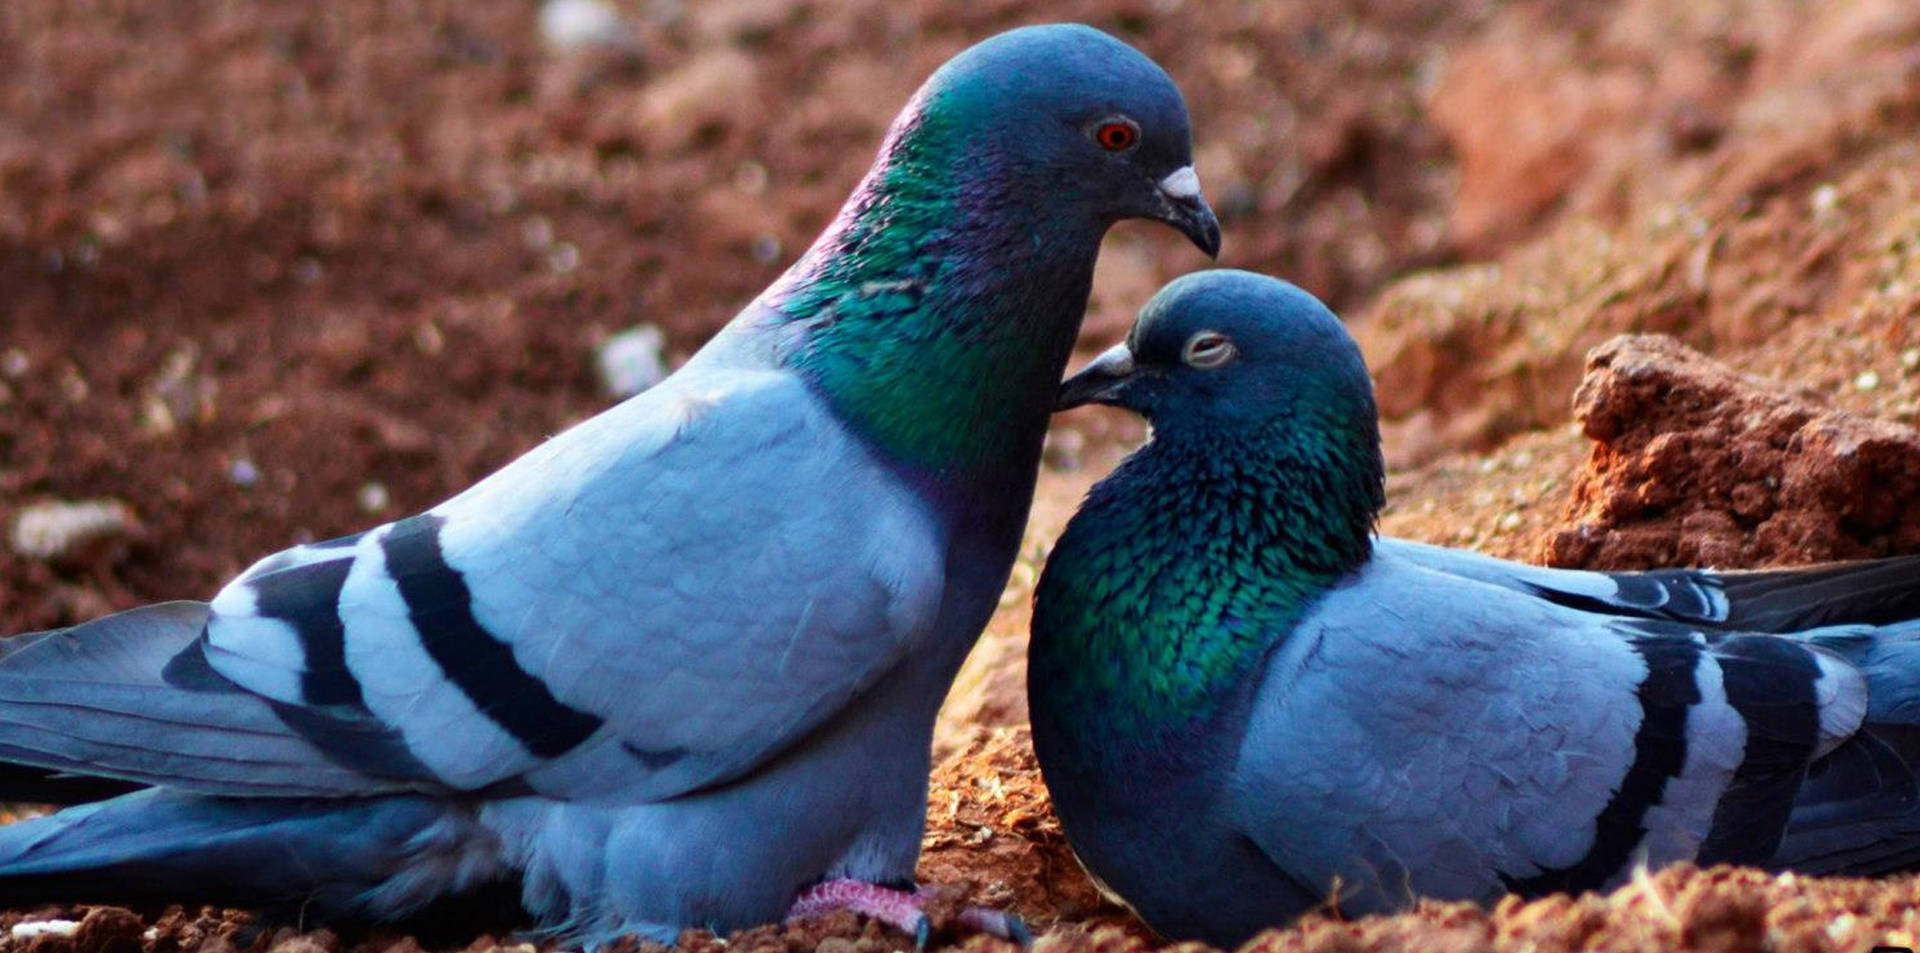 Pigeon Love Birds In Soil Wallpaper